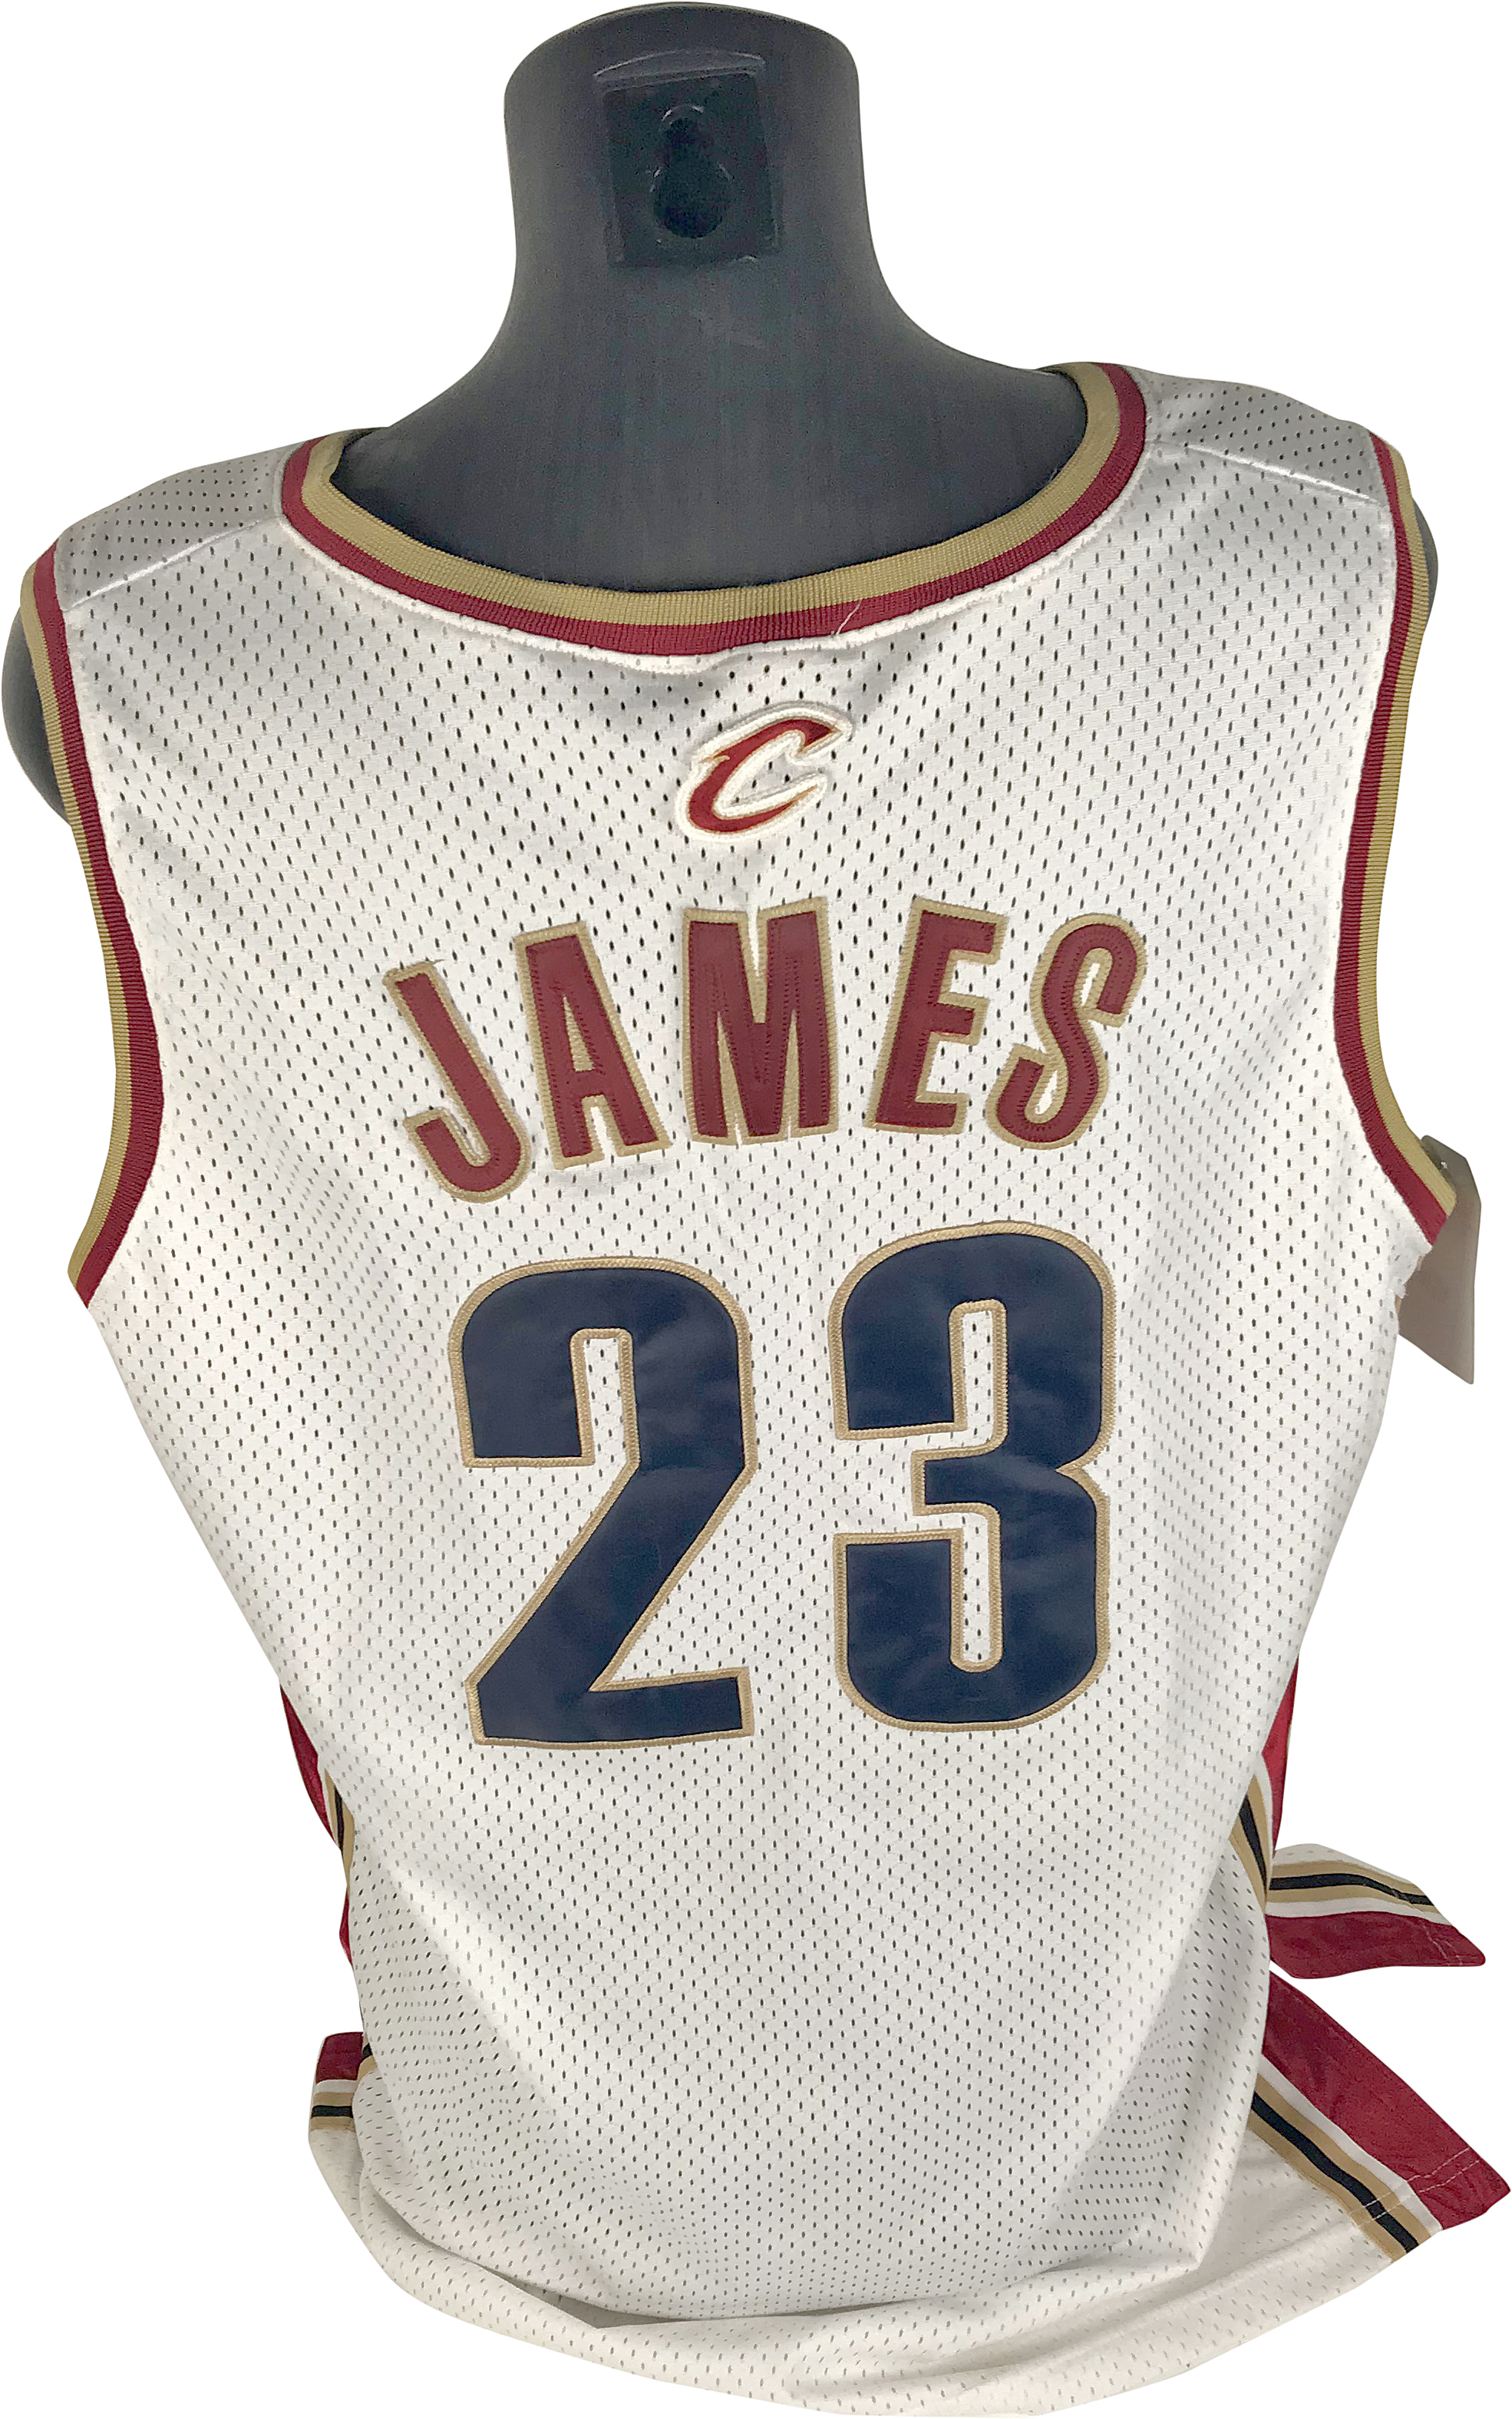 LeBron James Cleveland Cavaliers Jersey XL – Laundry